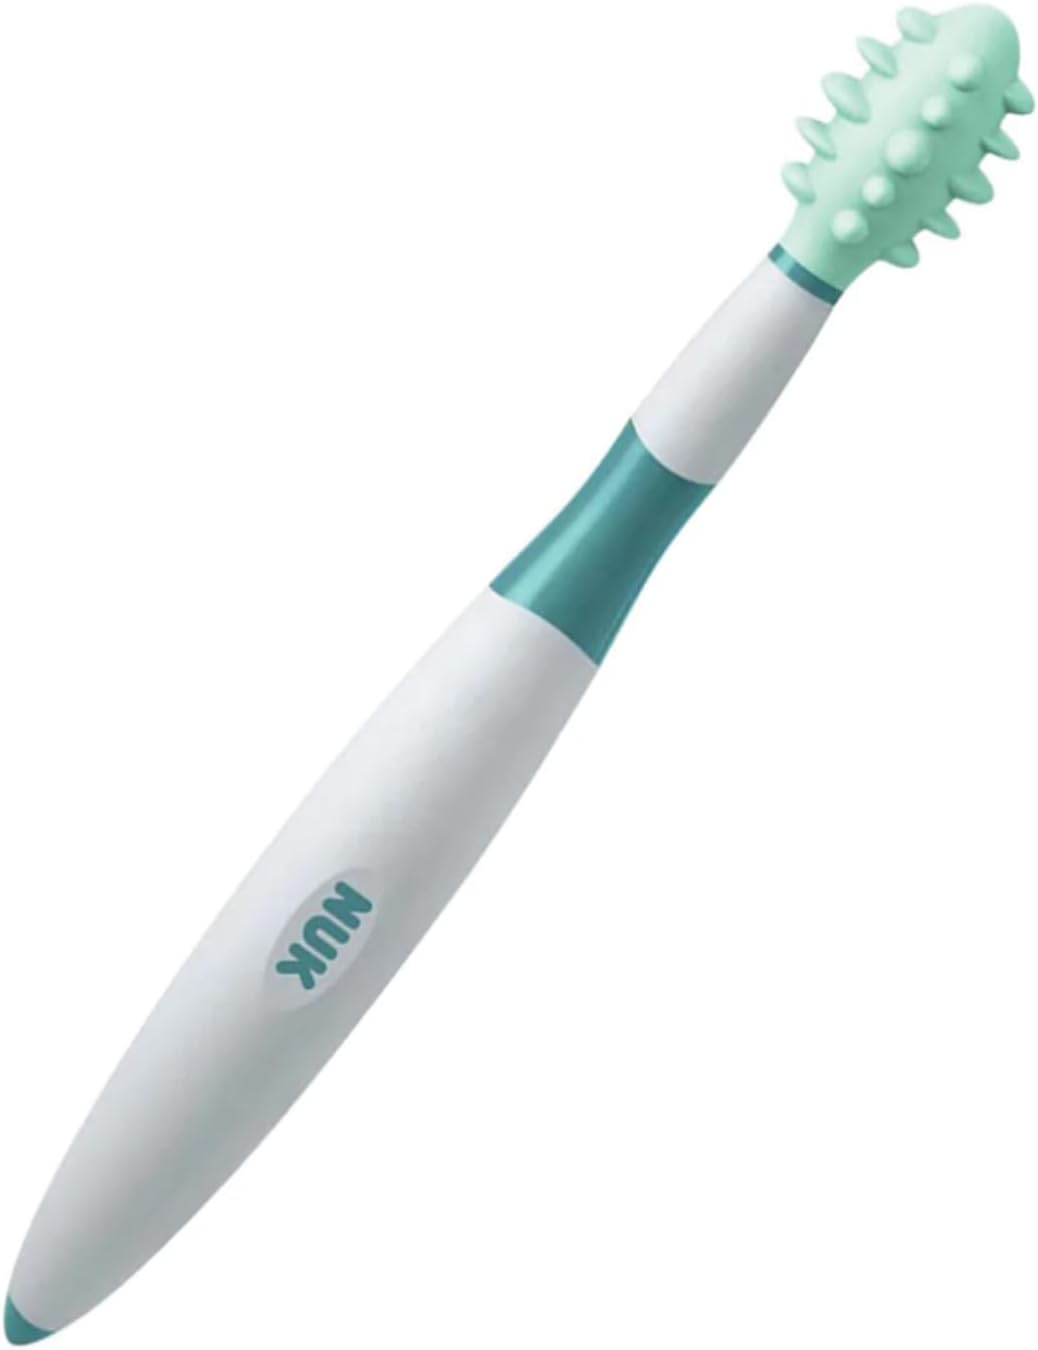 Nuk Brush Oral Motor Wonderful tools for oral motor stimulation and desensitization